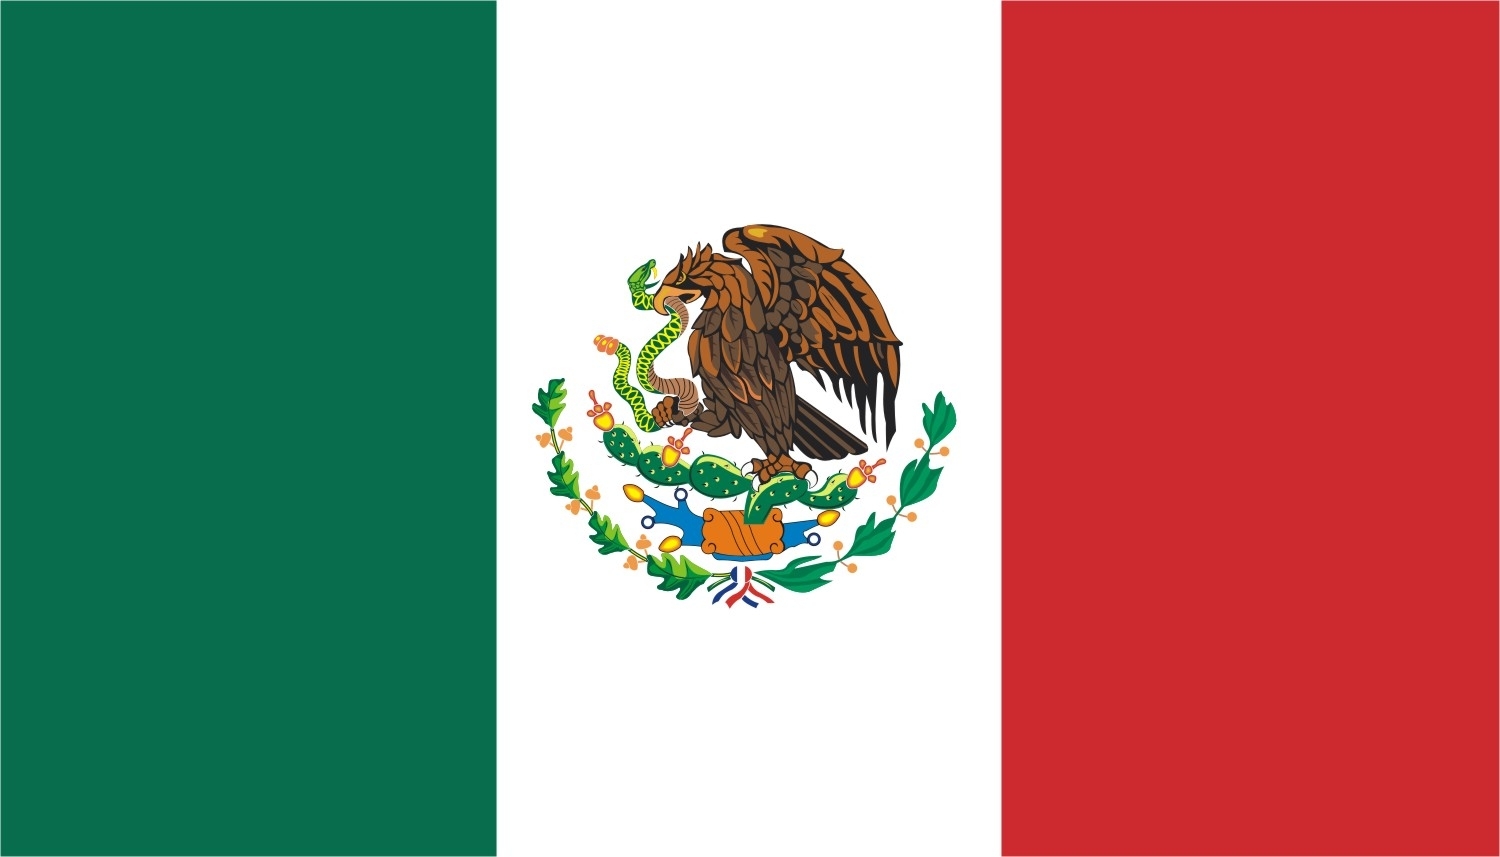 Nicaragua/Mexico